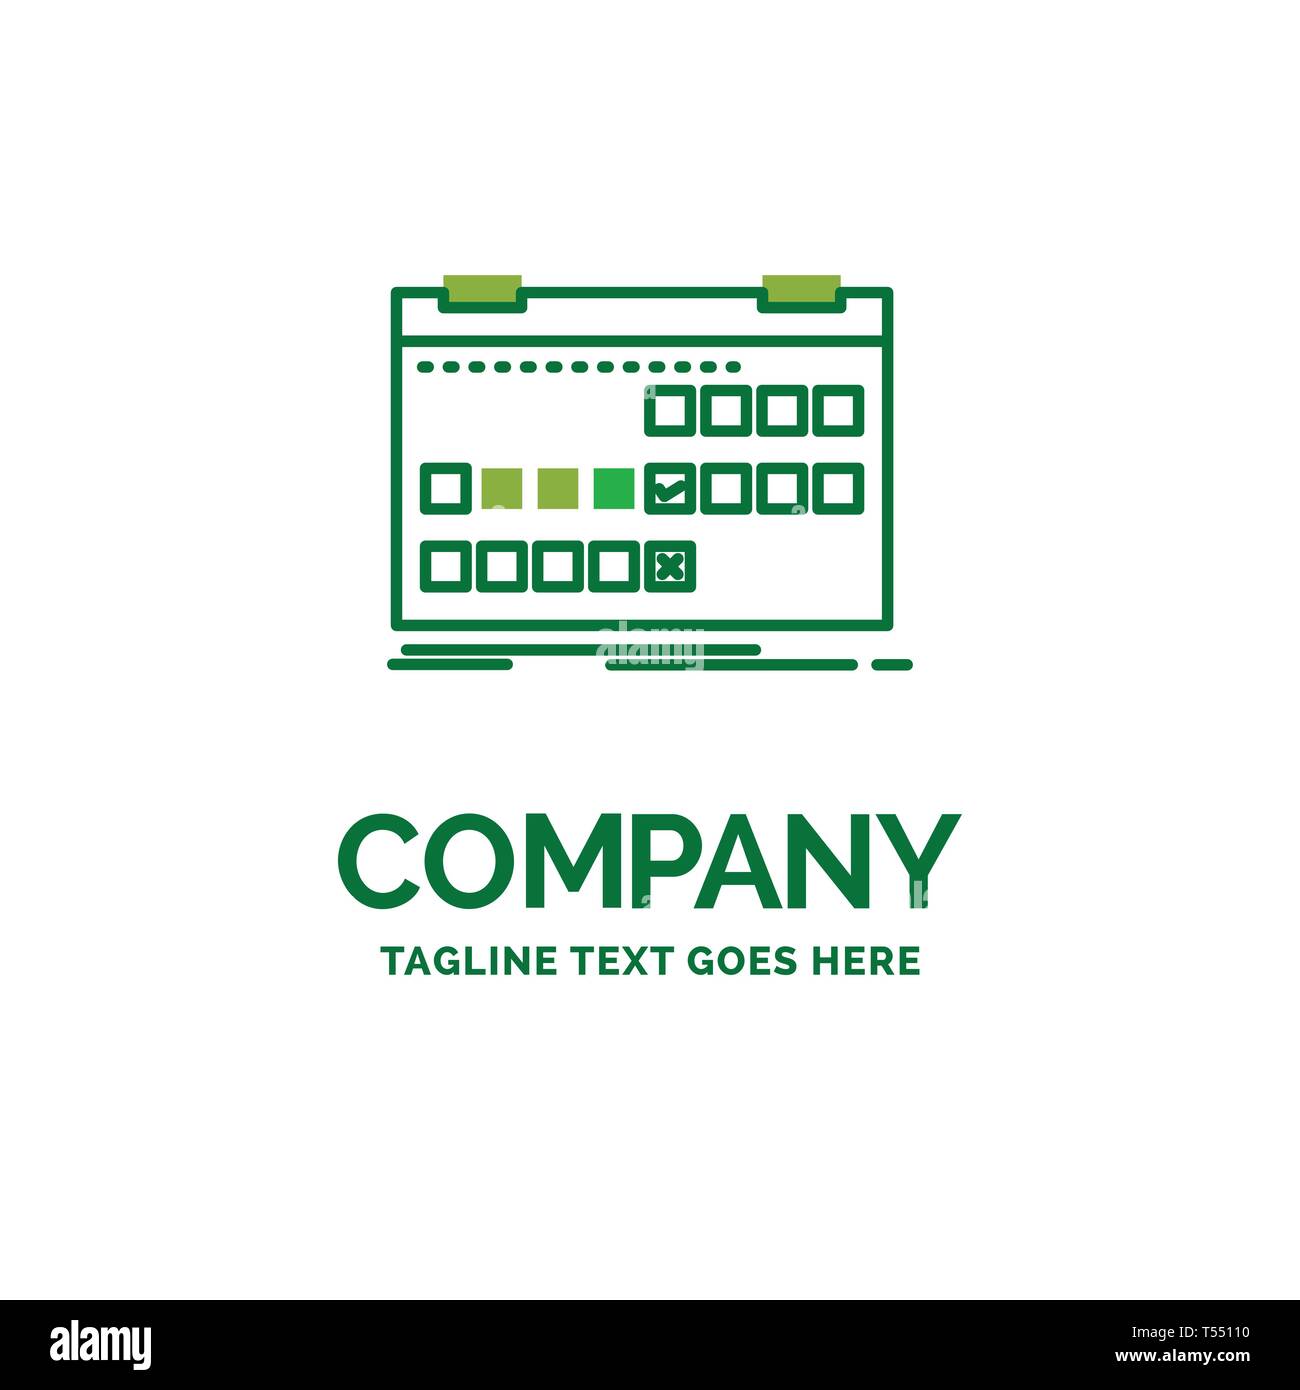 Calendar, date, event, release, schedule Flat Business Logo template. Creative Green Brand Name Design. Stock Vector